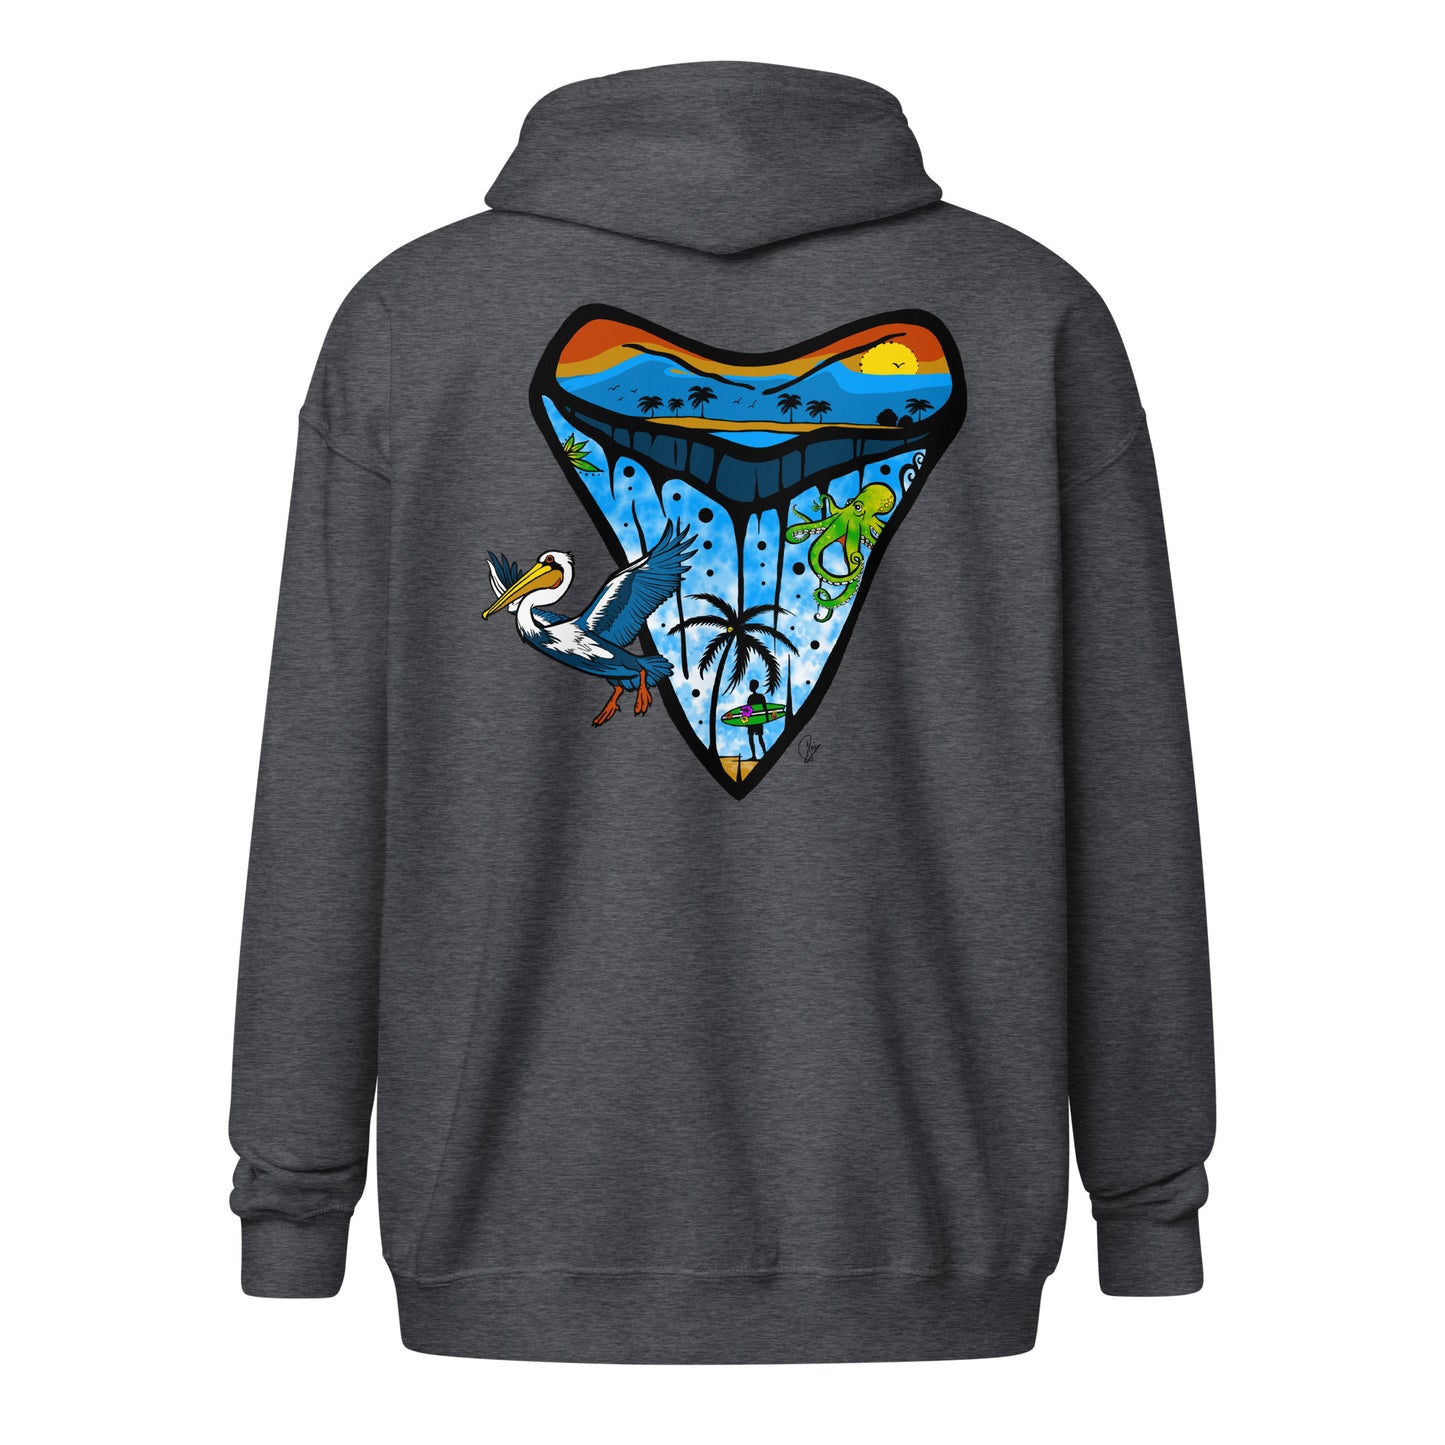 Shark tooth - Unisex ZIP hoodie